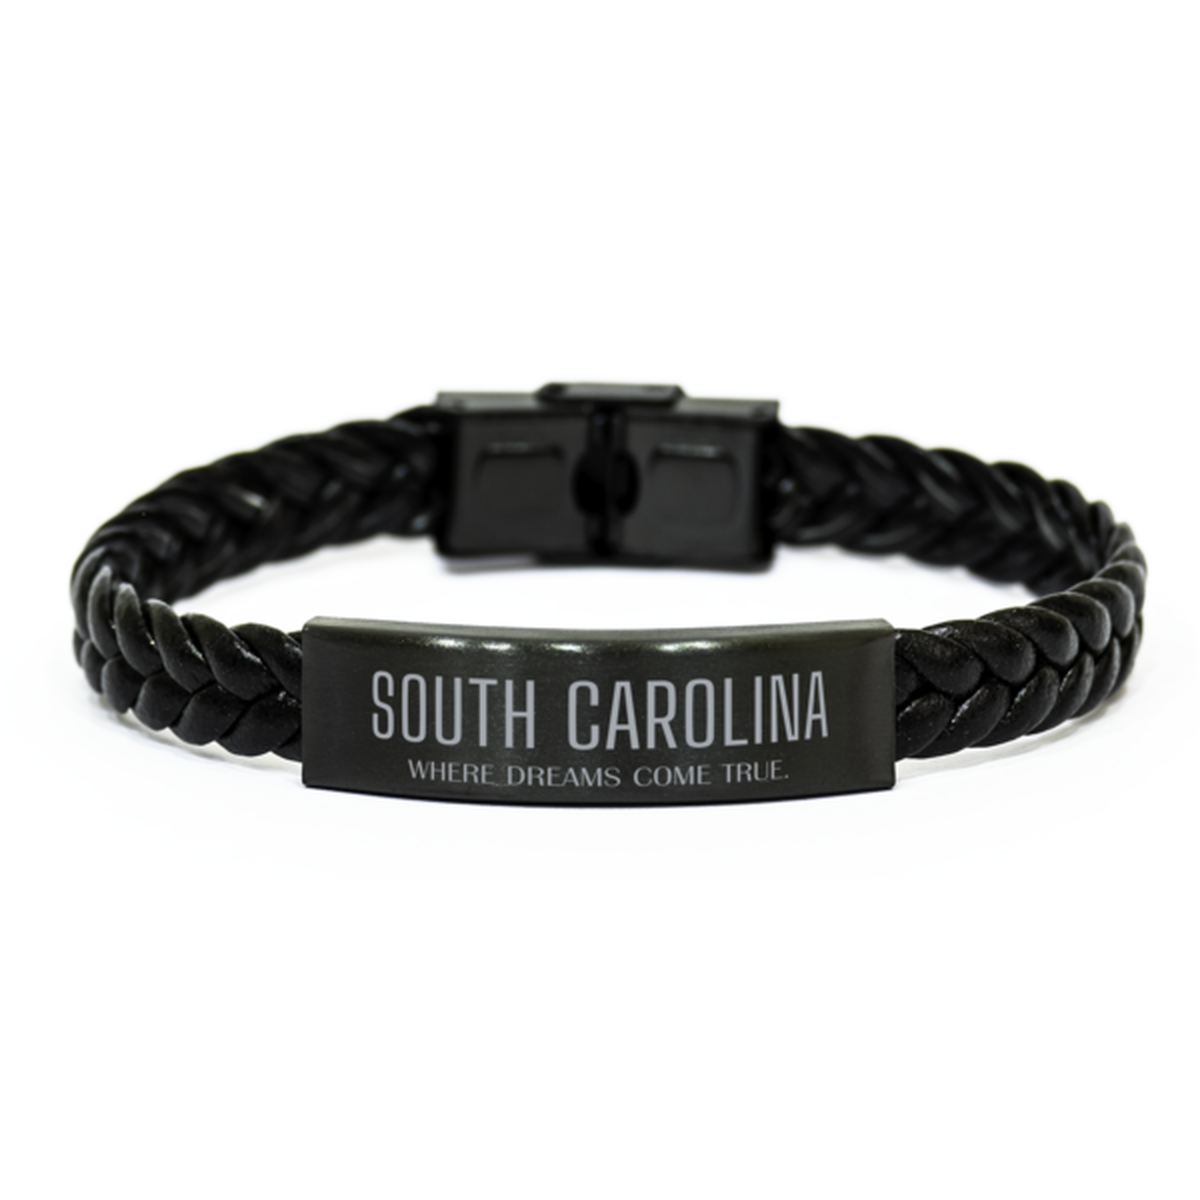 Love South Carolina State Braided Leather Bracelet, South Carolina Where dreams come true, Birthday Inspirational Gifts For South Carolina Men, Women, Friends